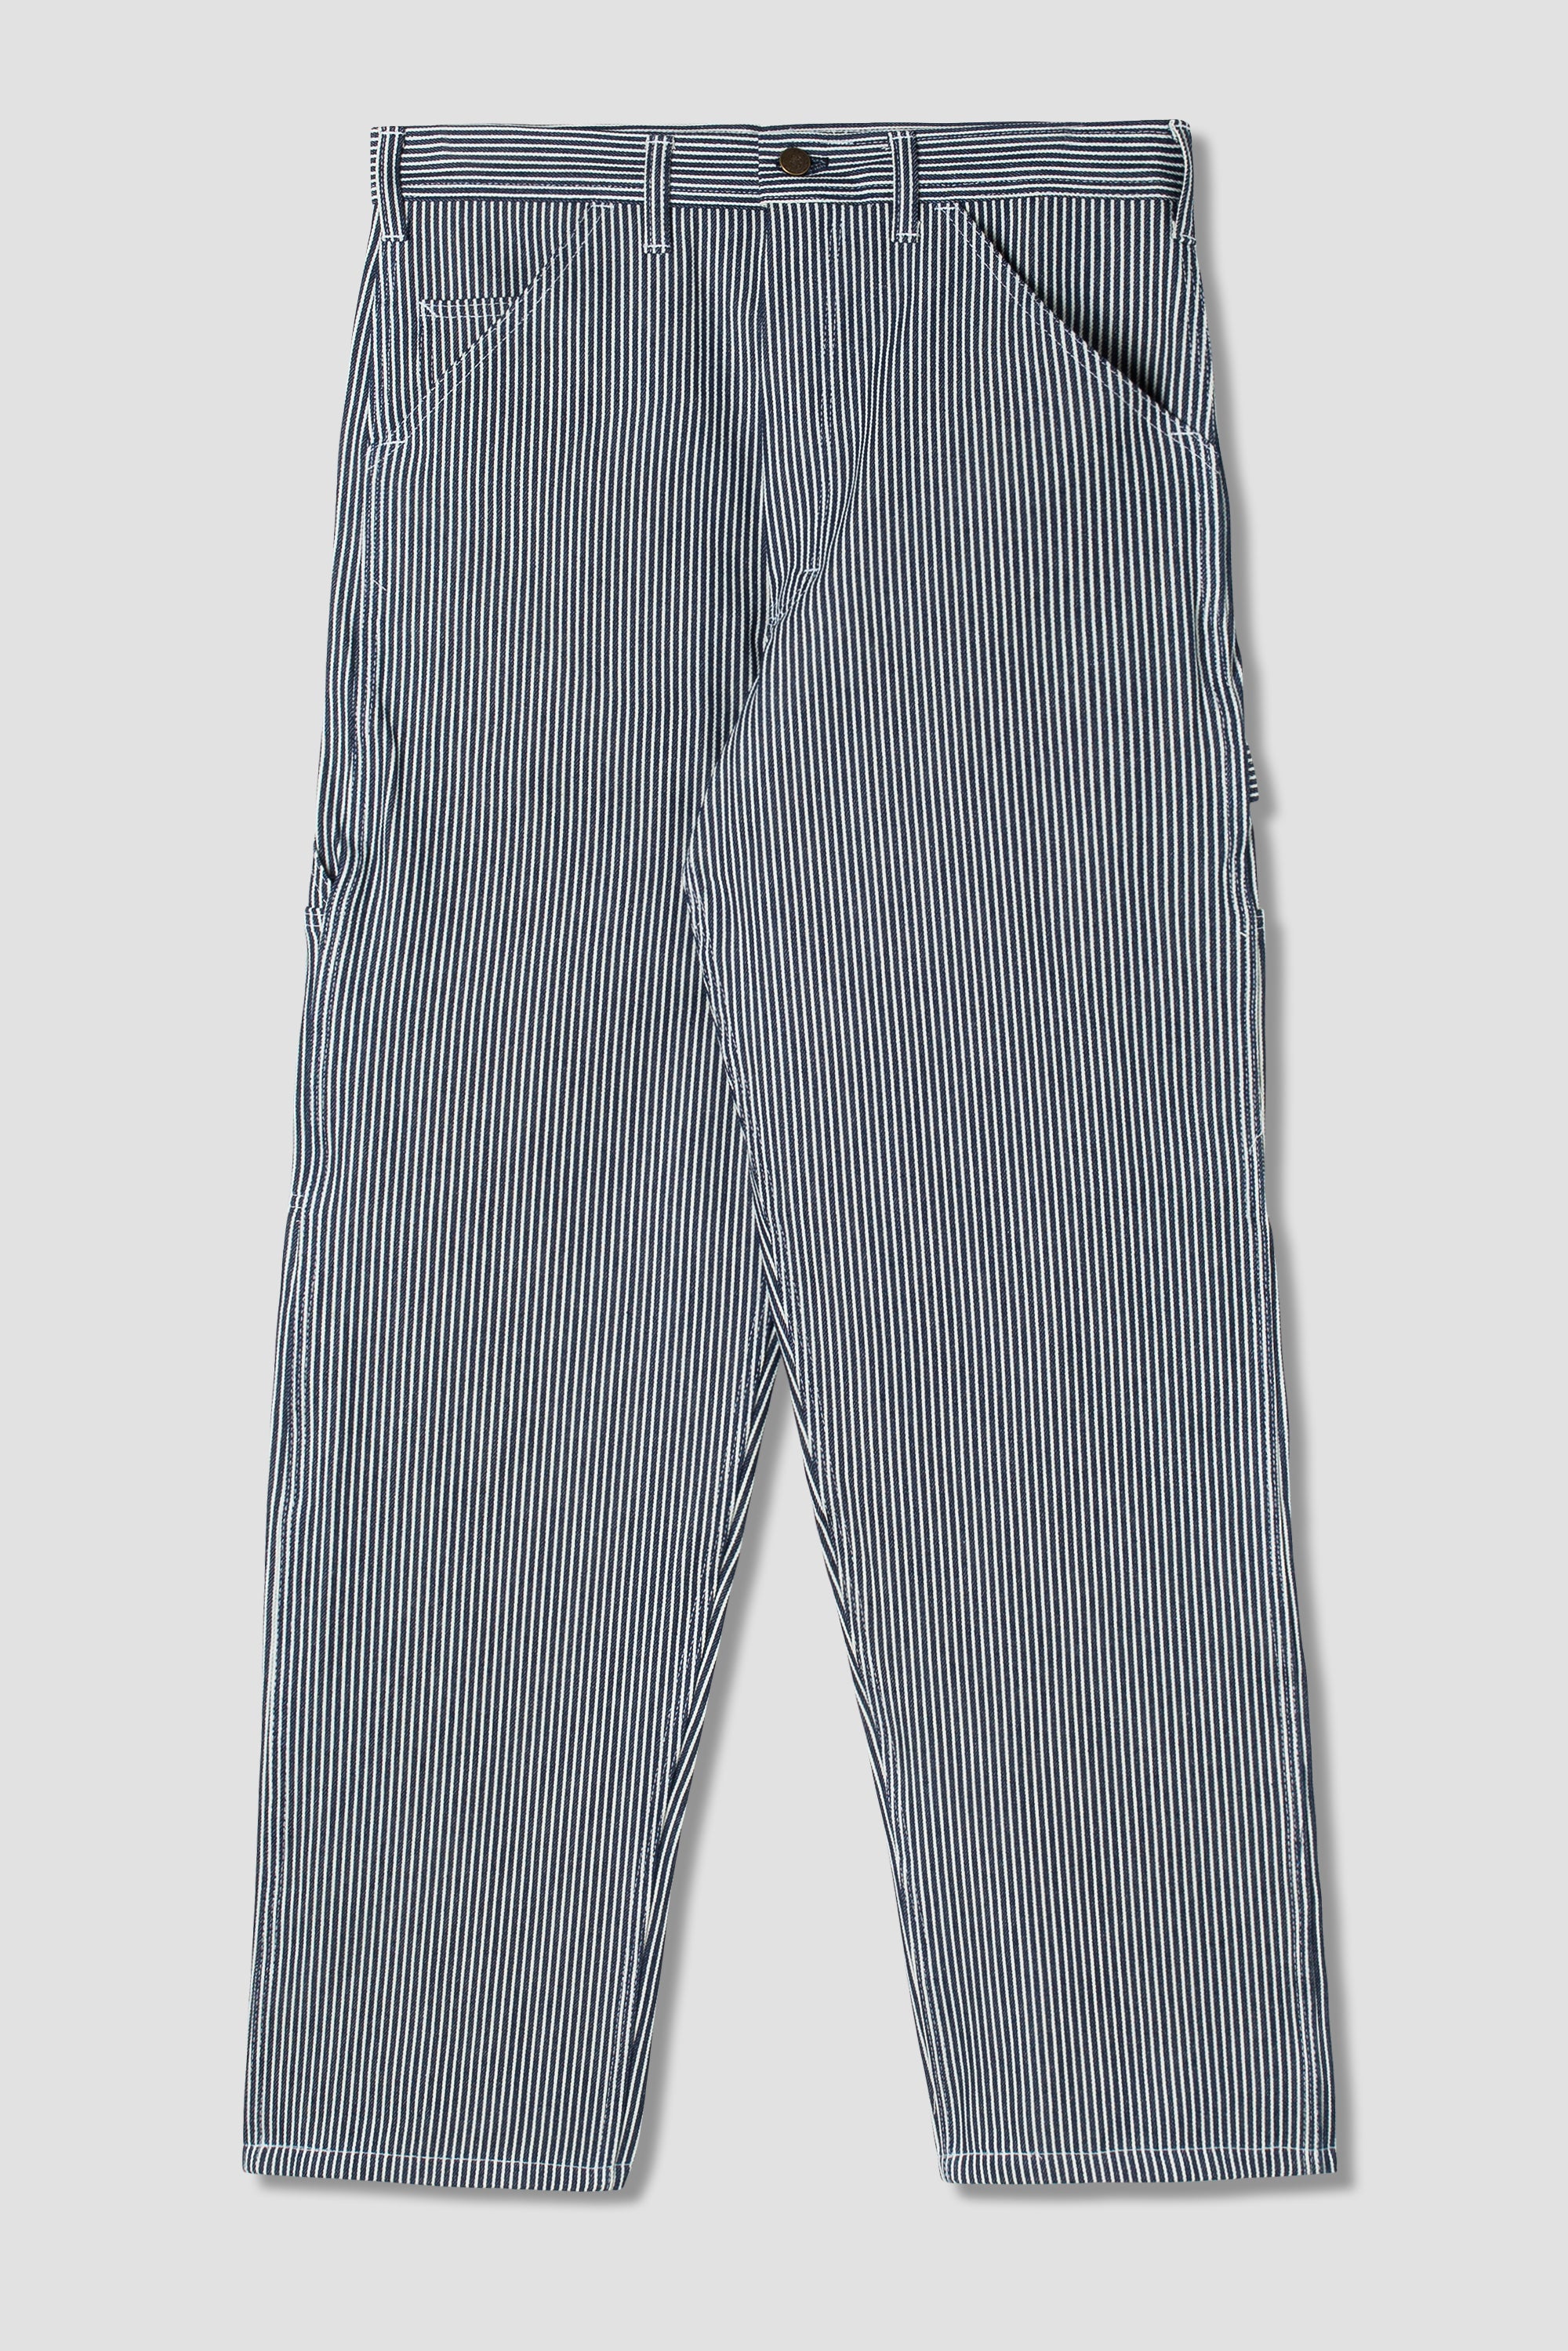 Tarlee 3/4 Length Striped Pant – Black Pepper